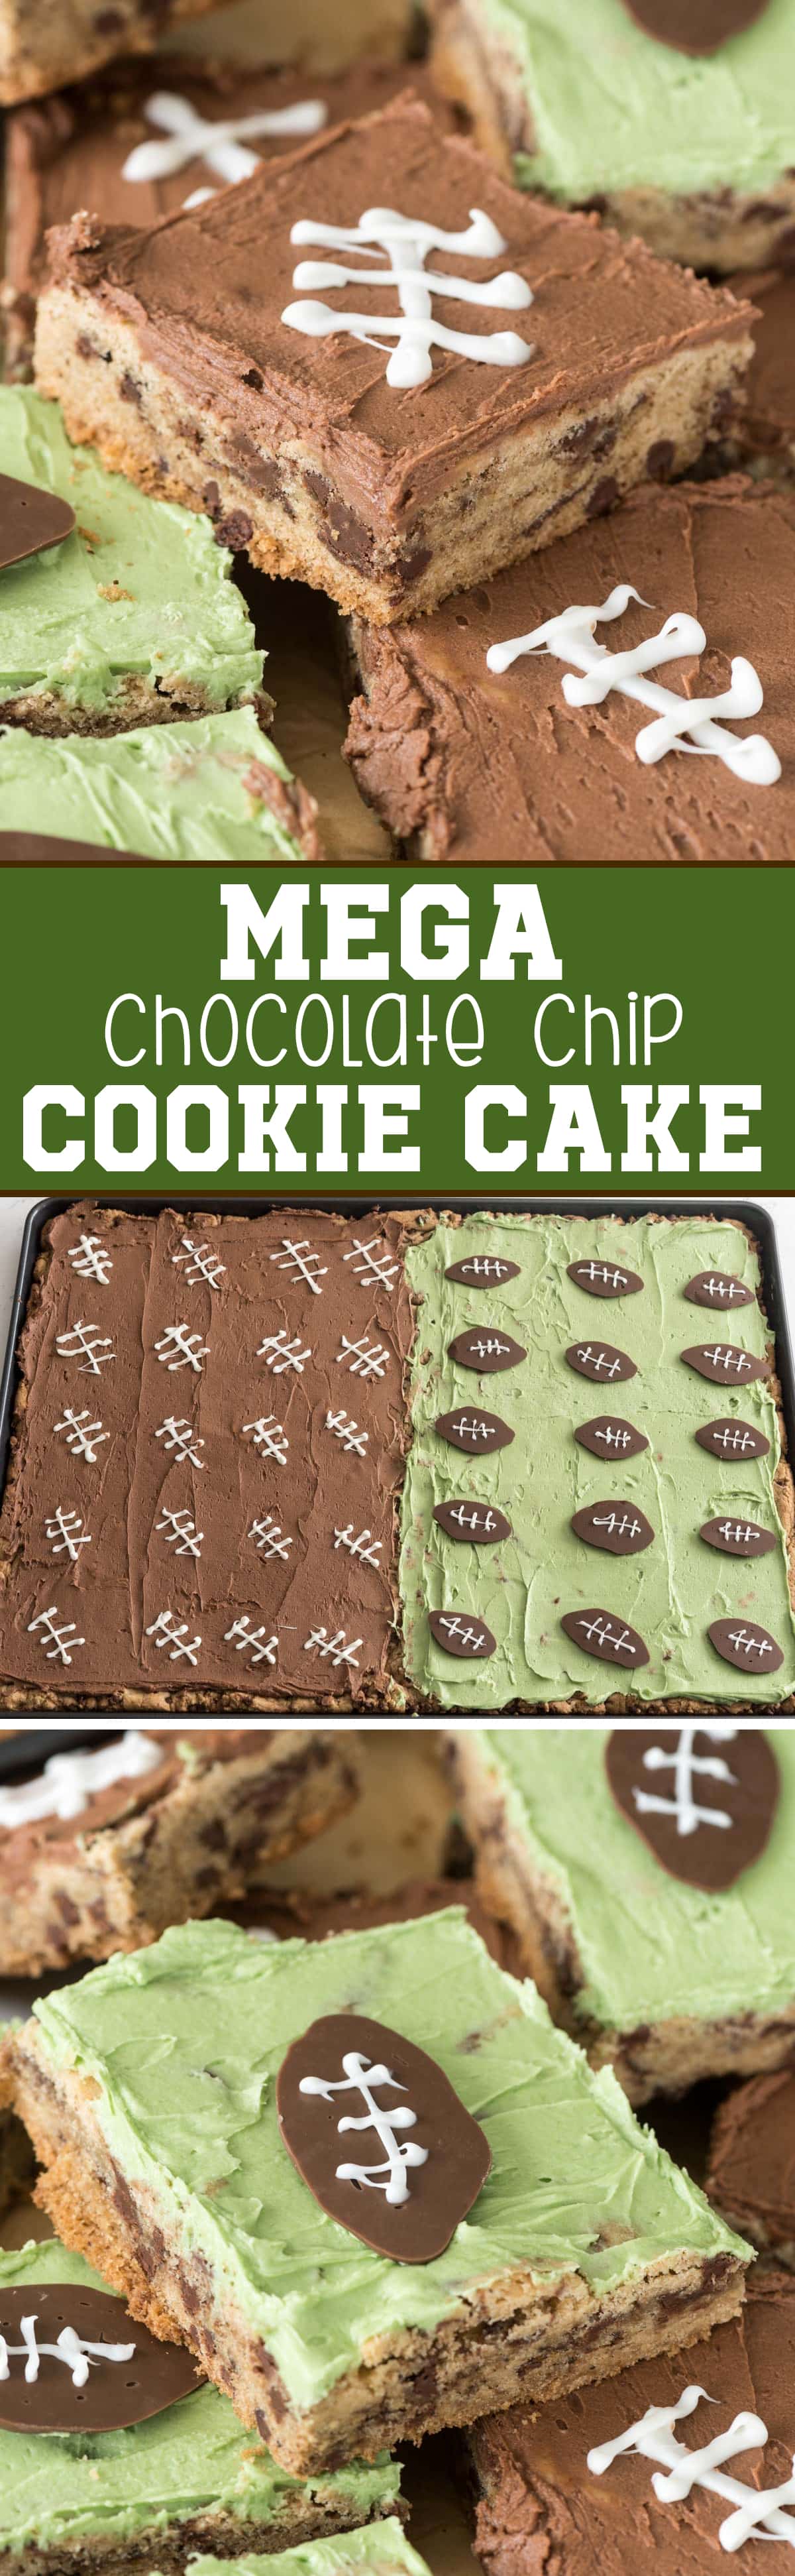 https://www.crazyforcrust.com/wp-content/uploads/2016/08/Mega-Chocolate-Chip-Cookie-Cake.jpg